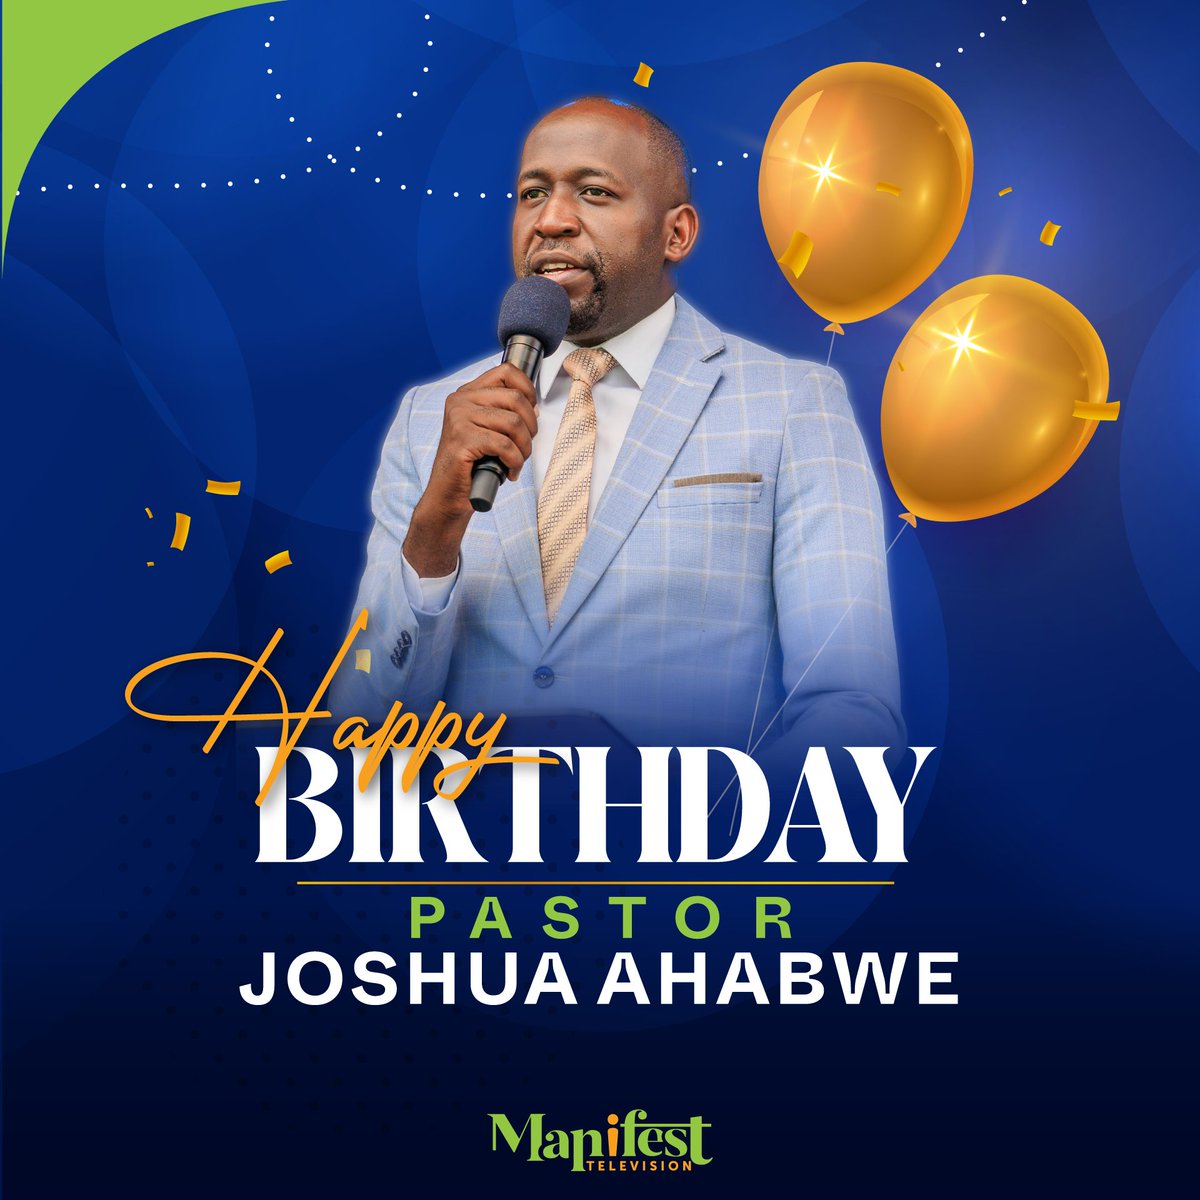 Happy birthday Pastor Joshua Ahabwe.